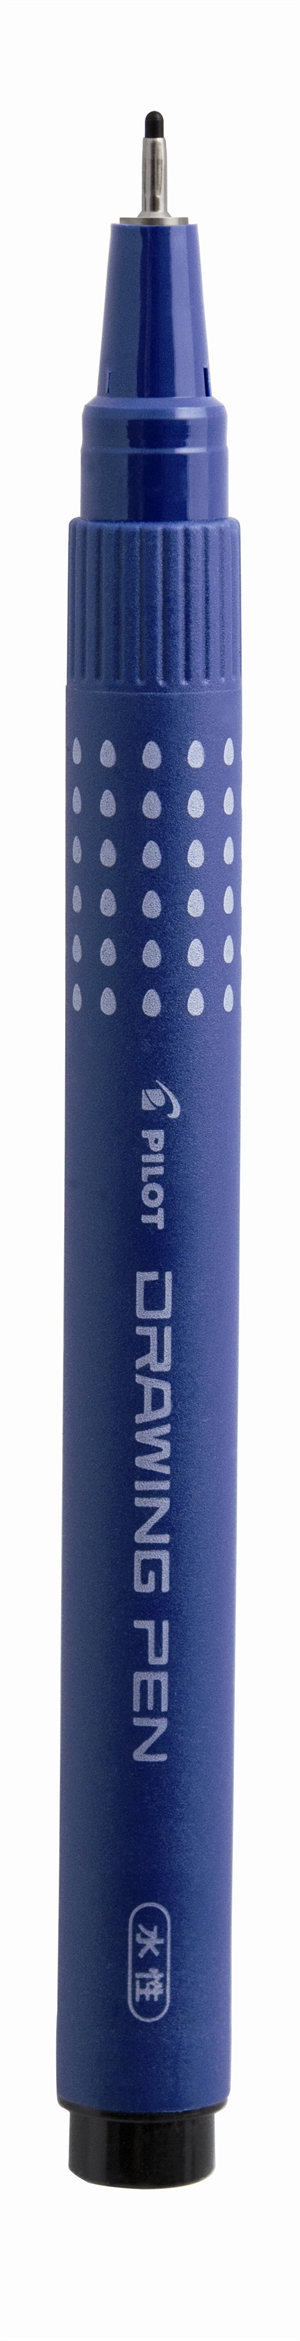 Pilot Feltip Pen with Cap, Drawing Pen 0.8mm Black